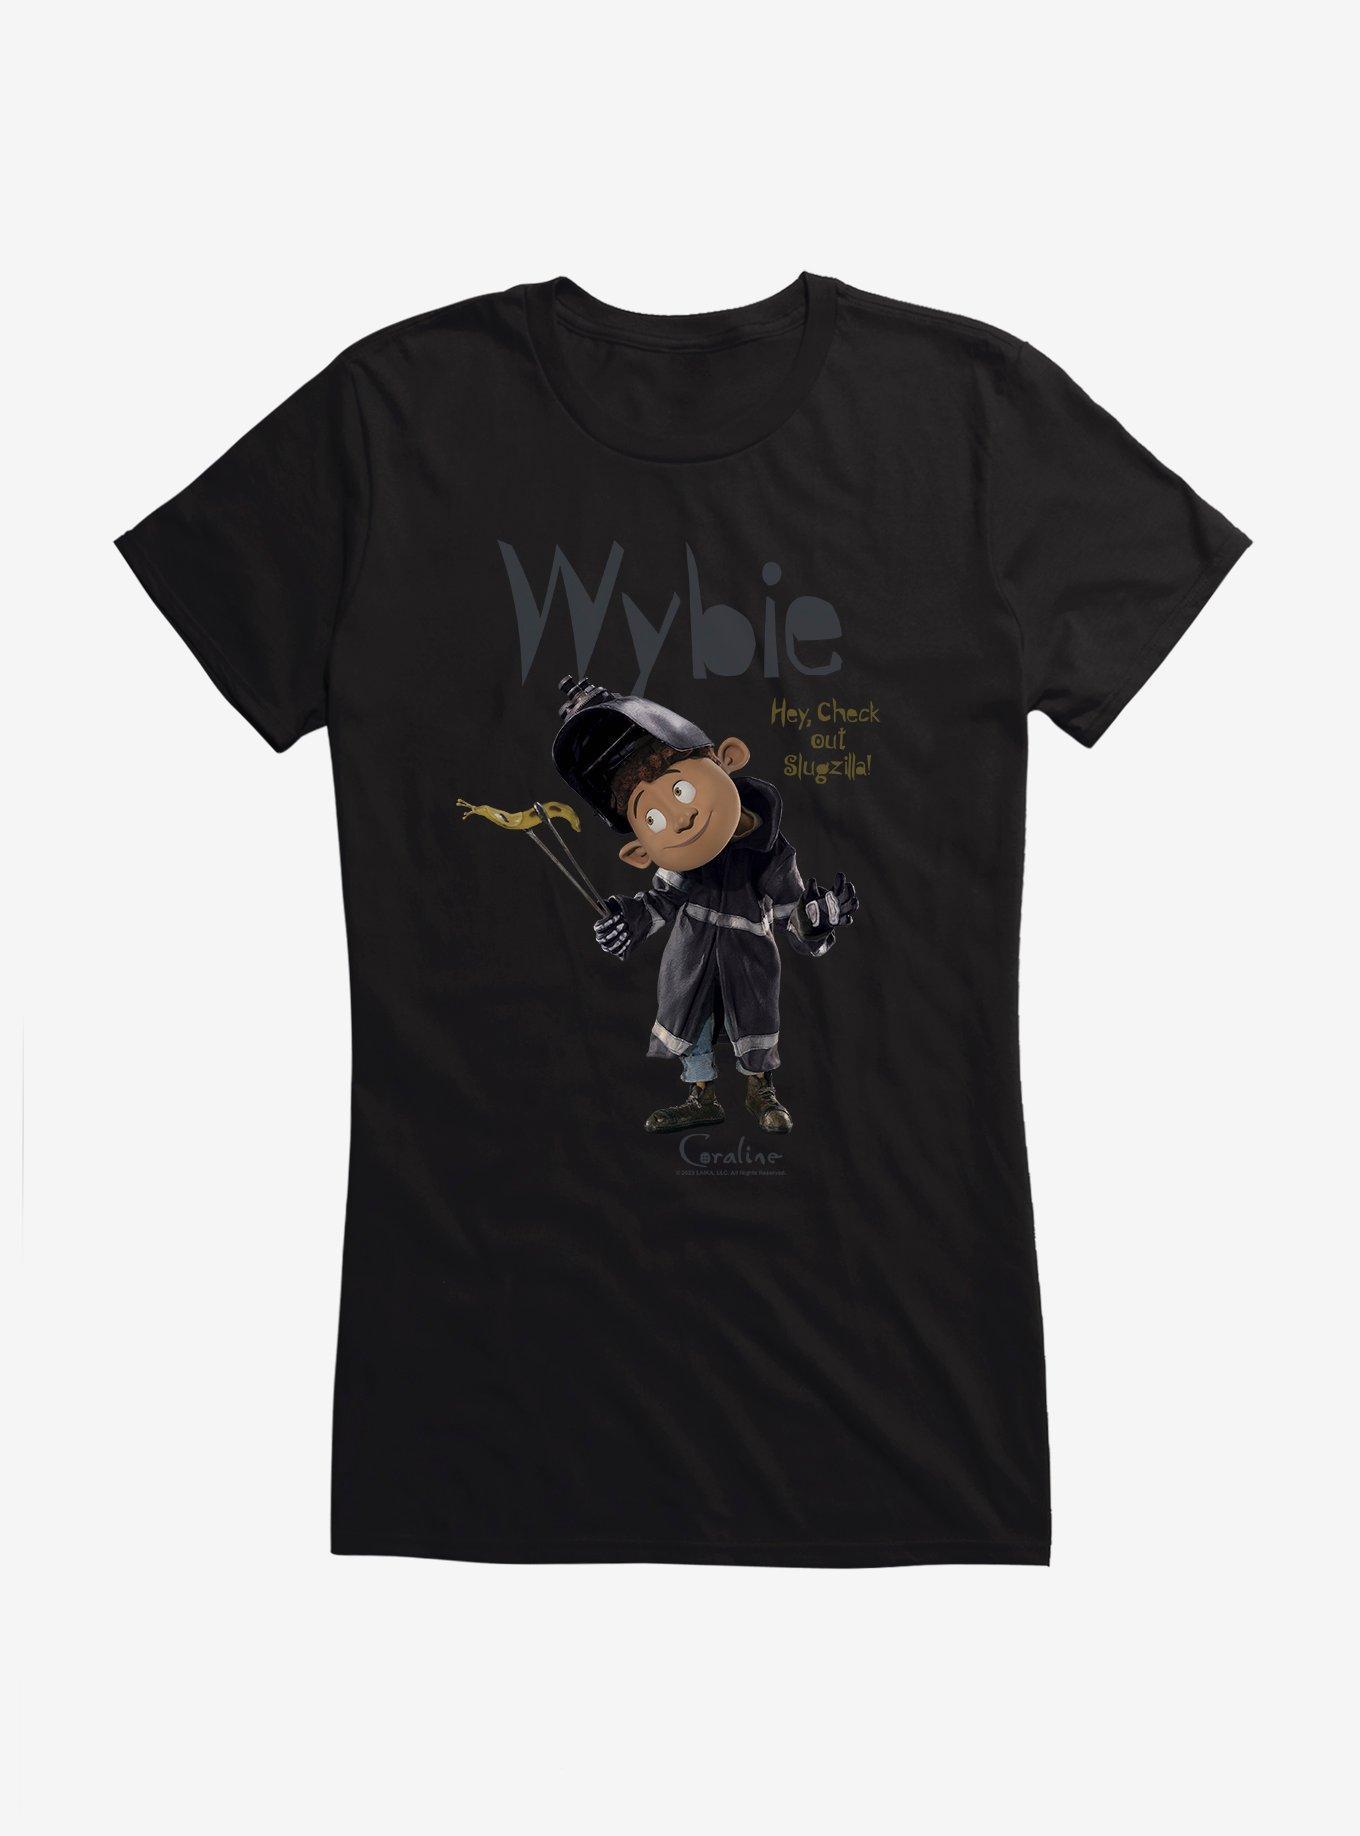 Coraline Wybie Girls T-Shirt, BLACK, hi-res